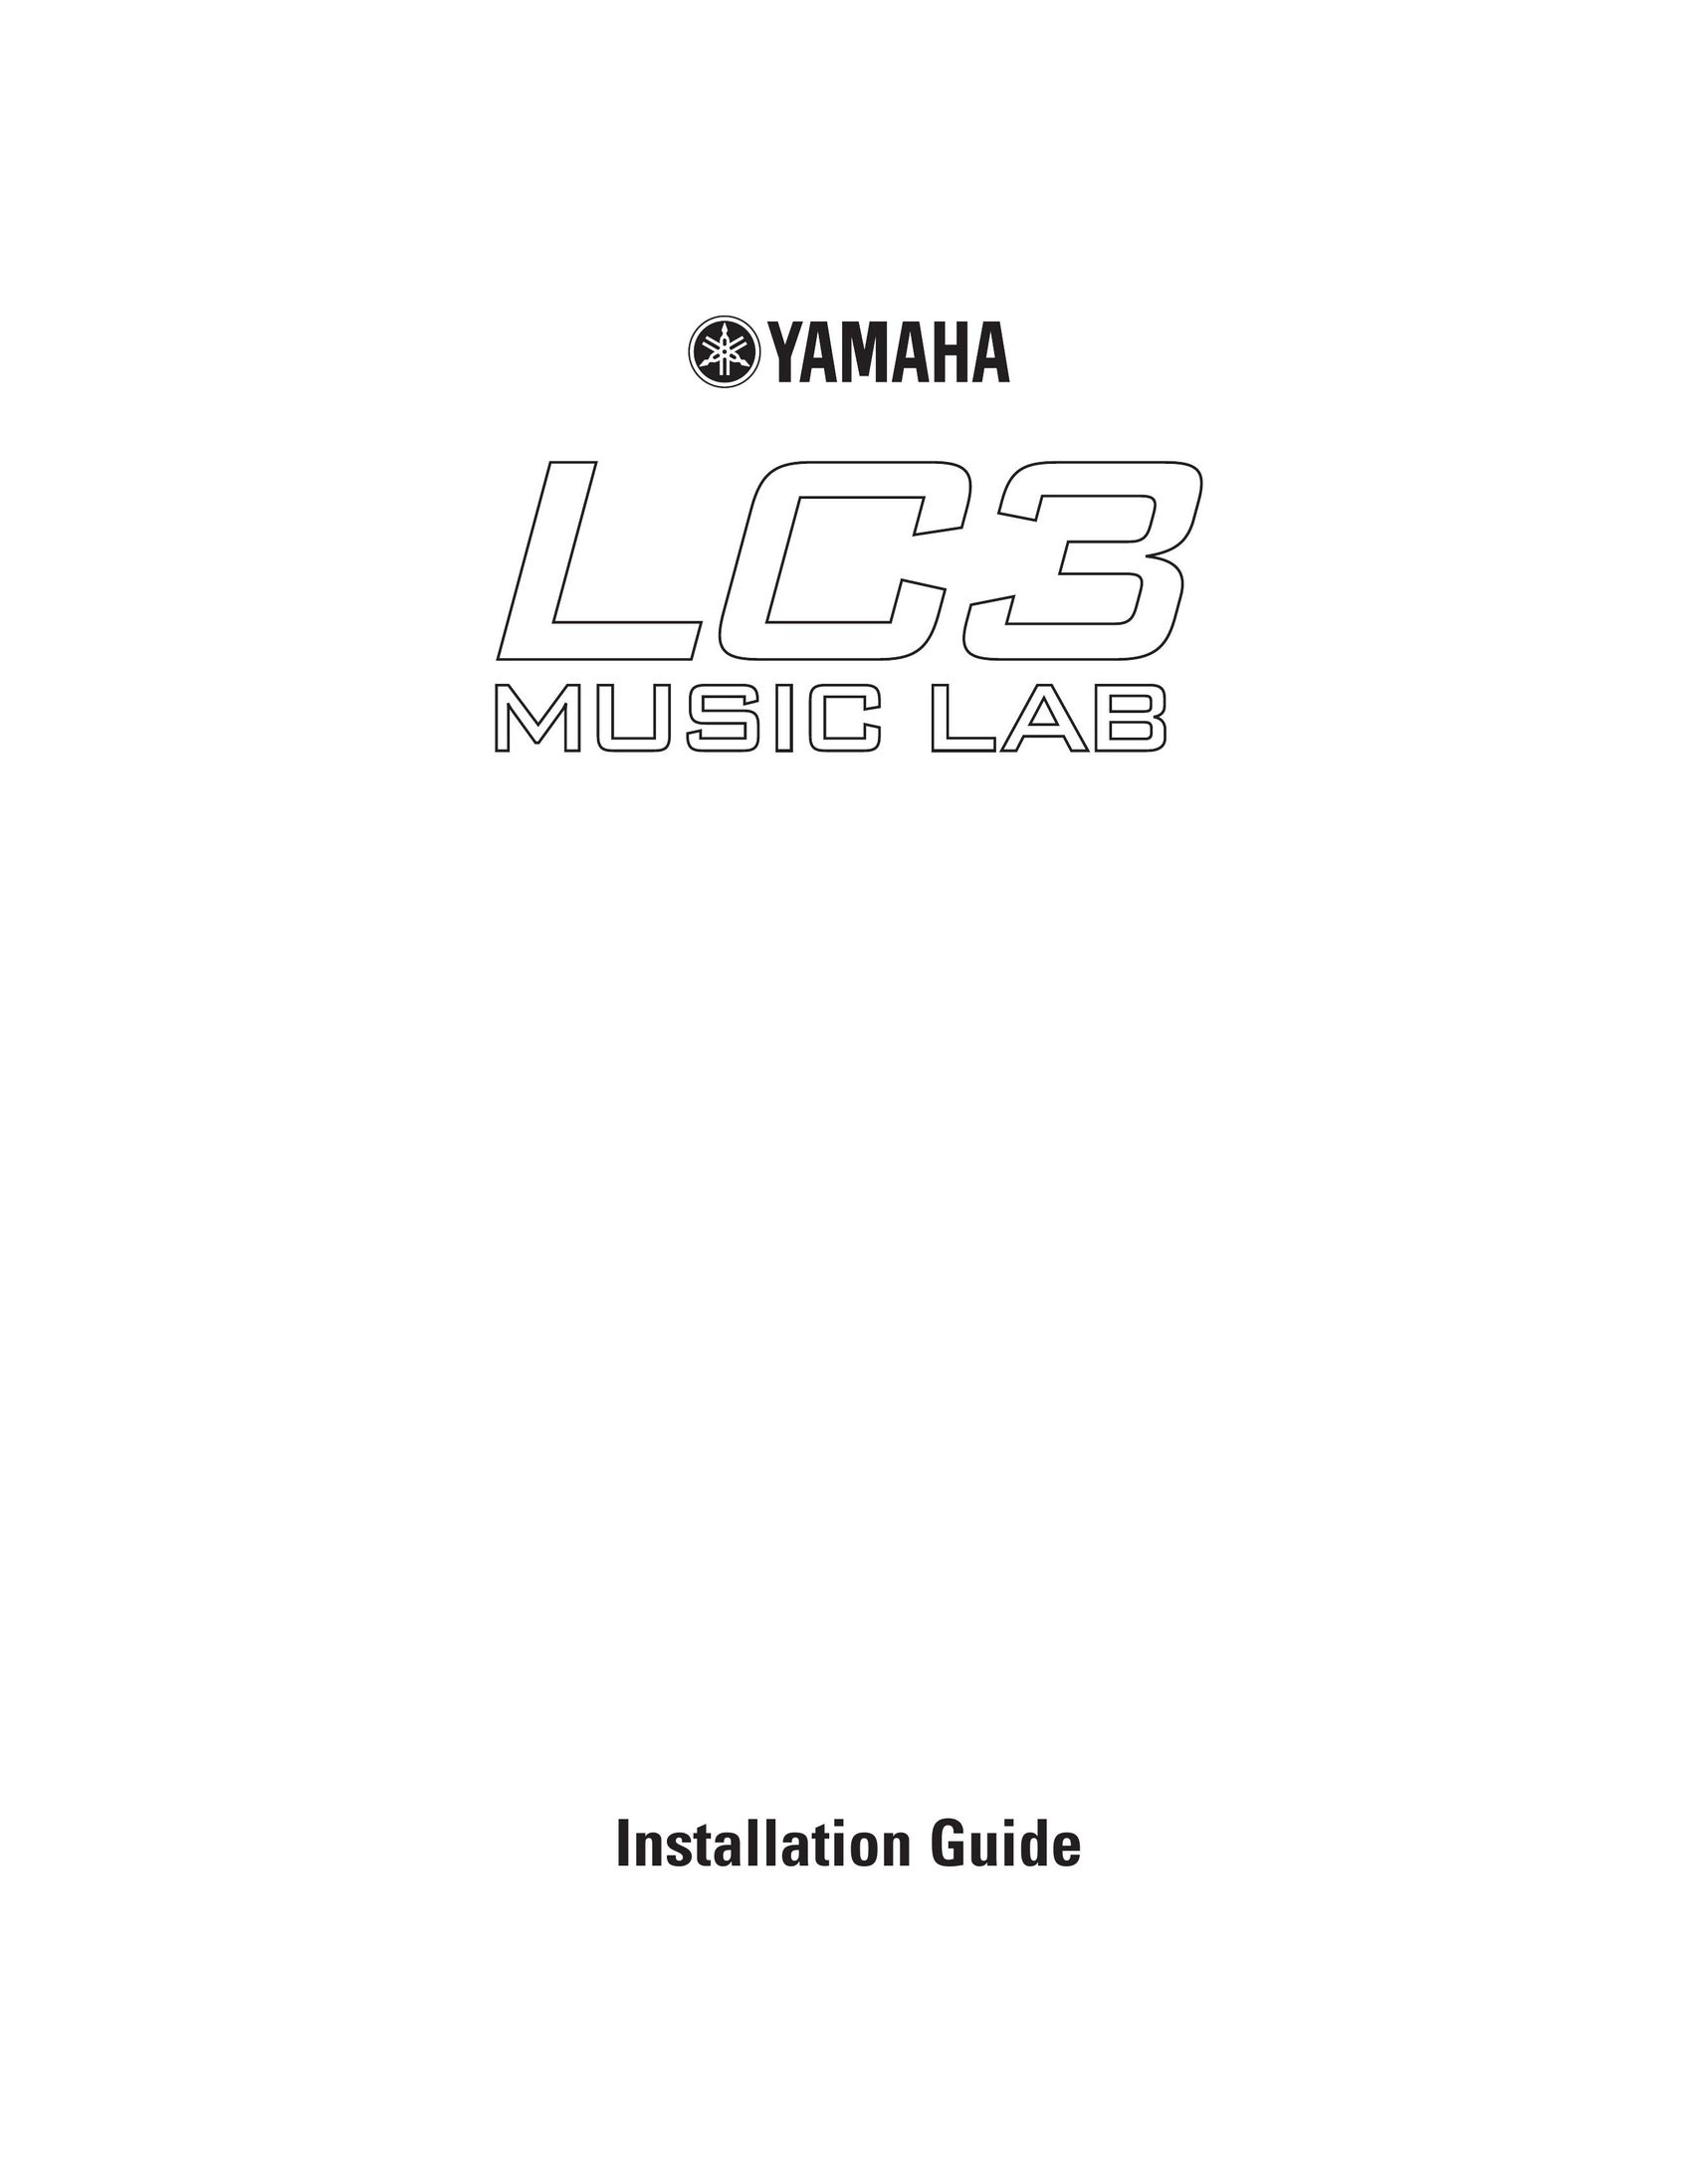 Yamaha Yamaha Music Lab Musical Toy Instrument User Manual